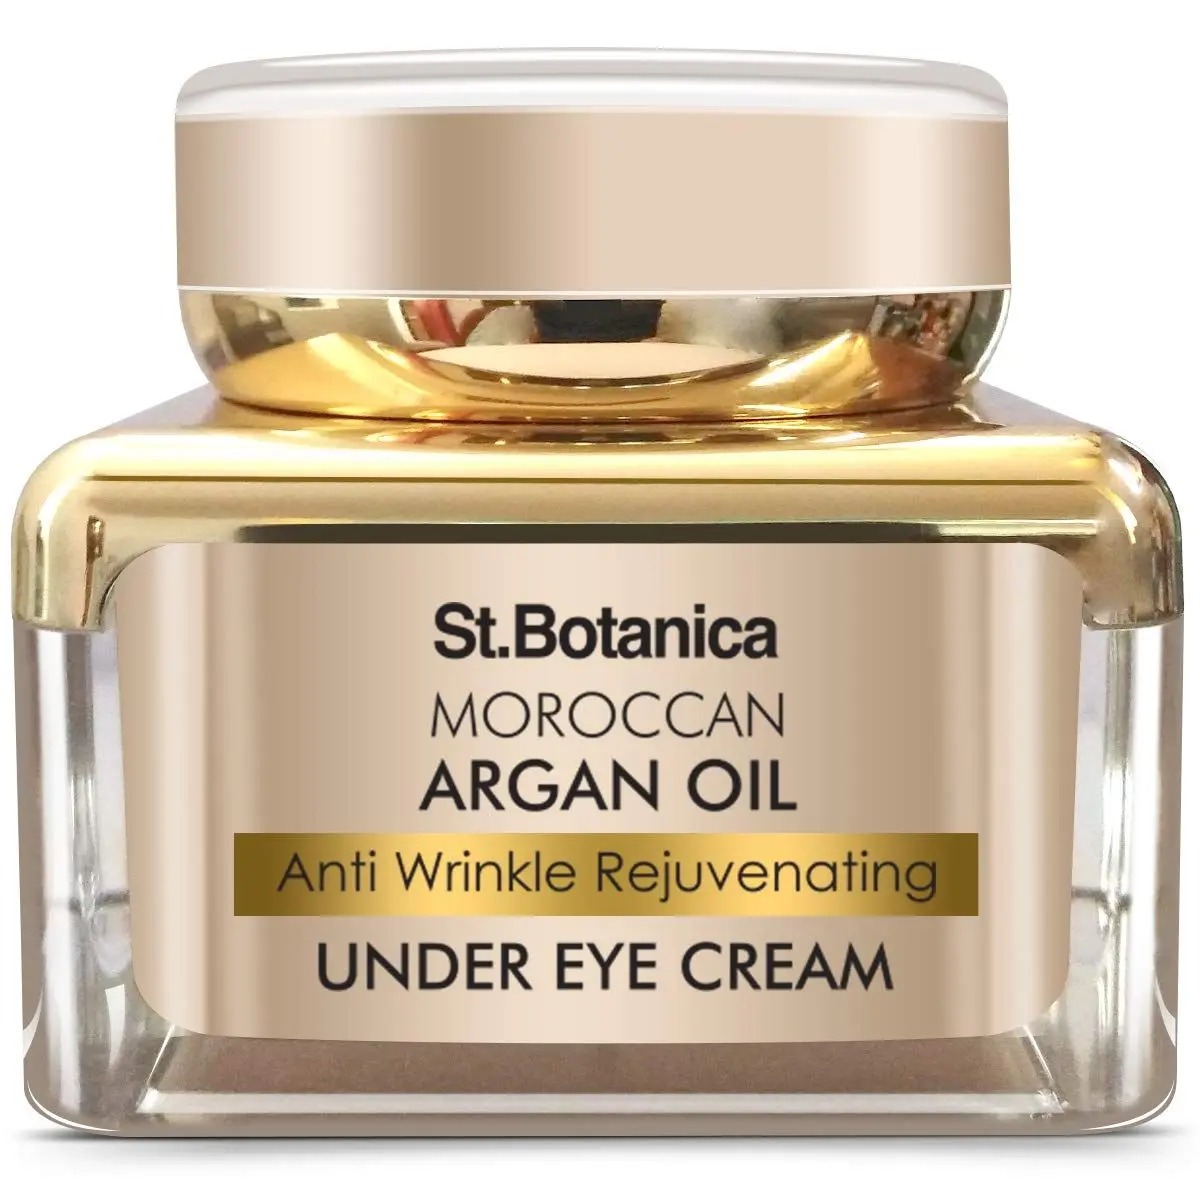 StBotanica Argan Oil Anti Wrinkle Rejuvenating Under Eye Cream